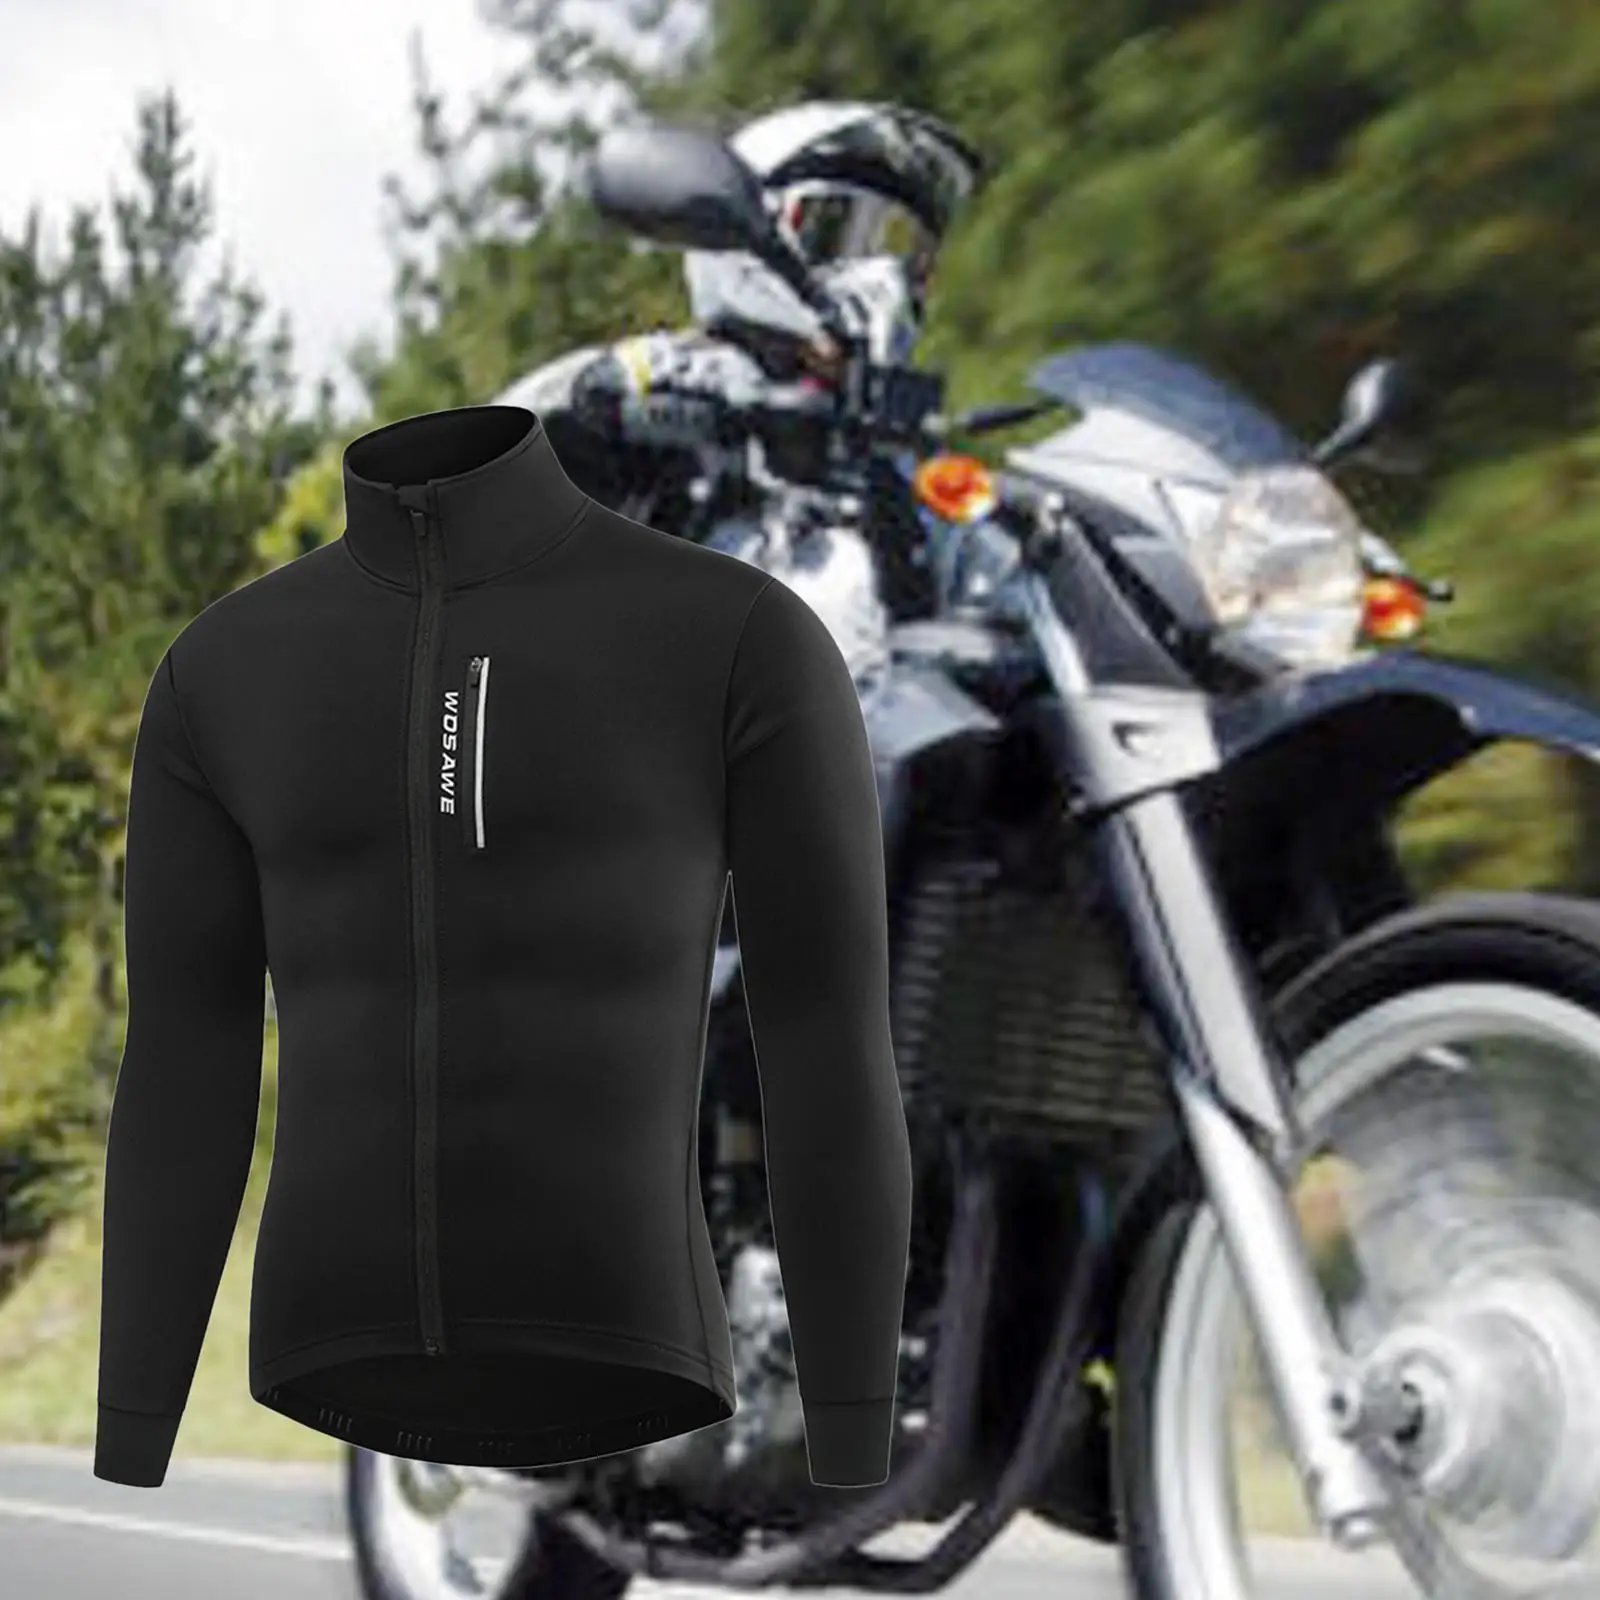 Thermal Bike Winter Jacket Lightweight Warm Coat Long Sleeves Raincoat Reflective Waterproof Windbreaker Fleece for Bicycle MTB